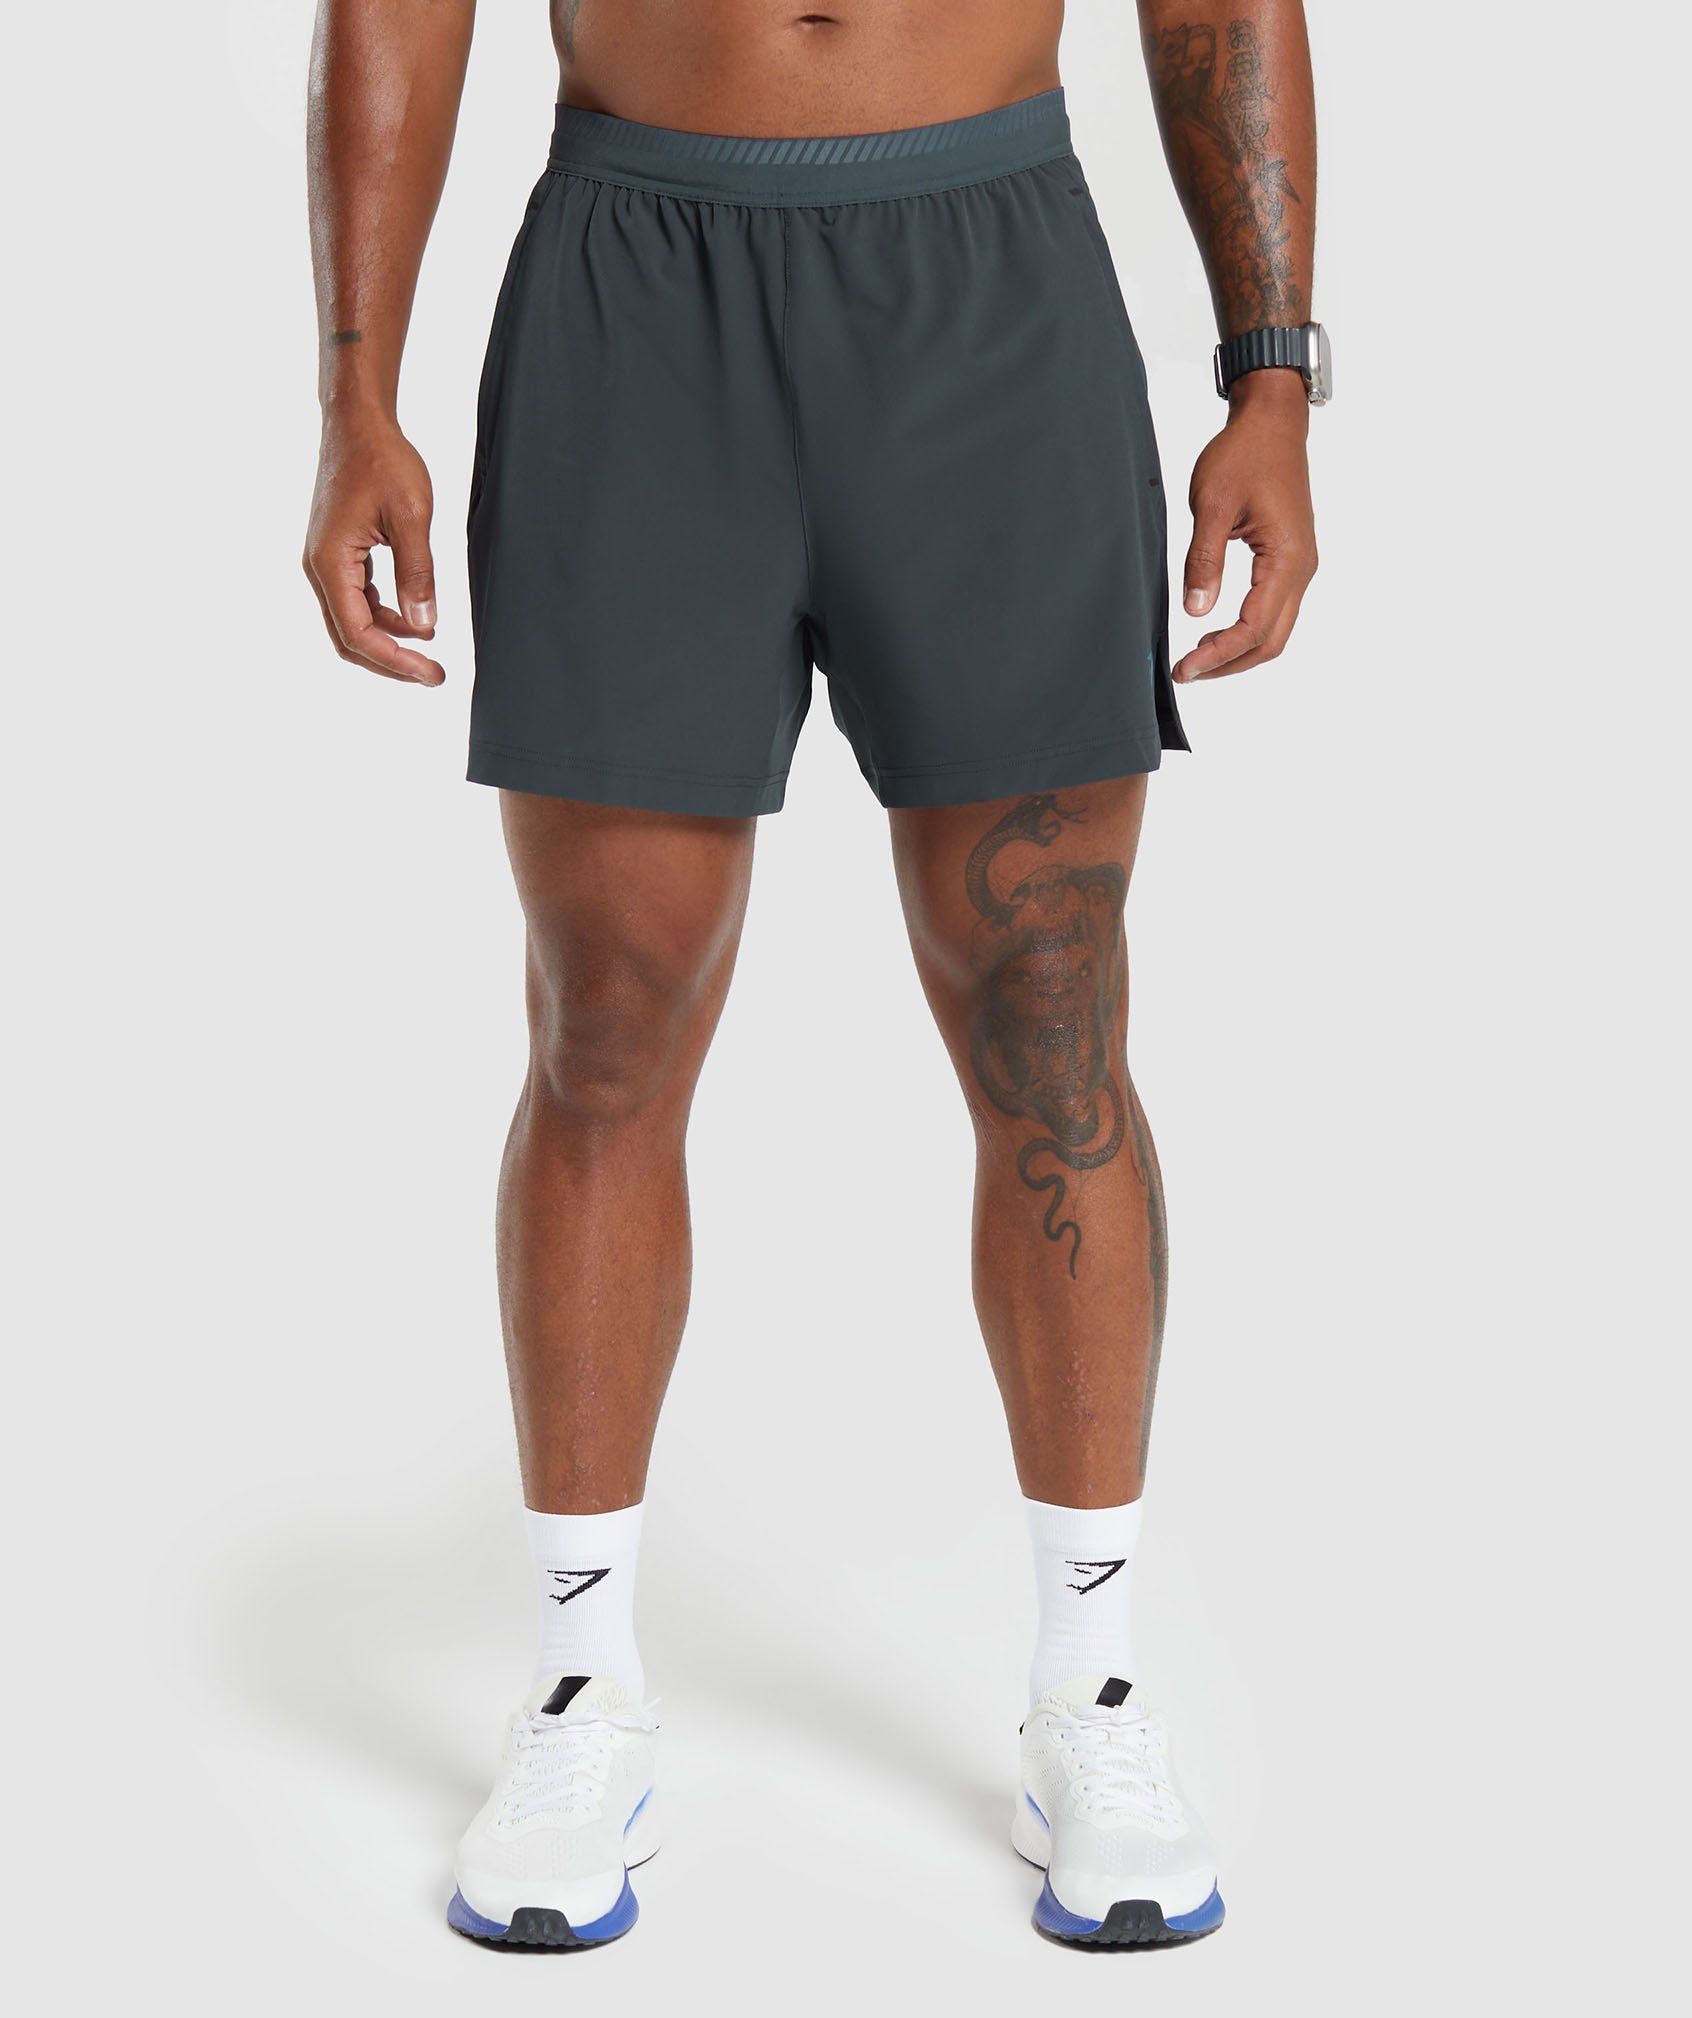 Gymshark Apex 5 Hybrid Shorts - Plum Brown